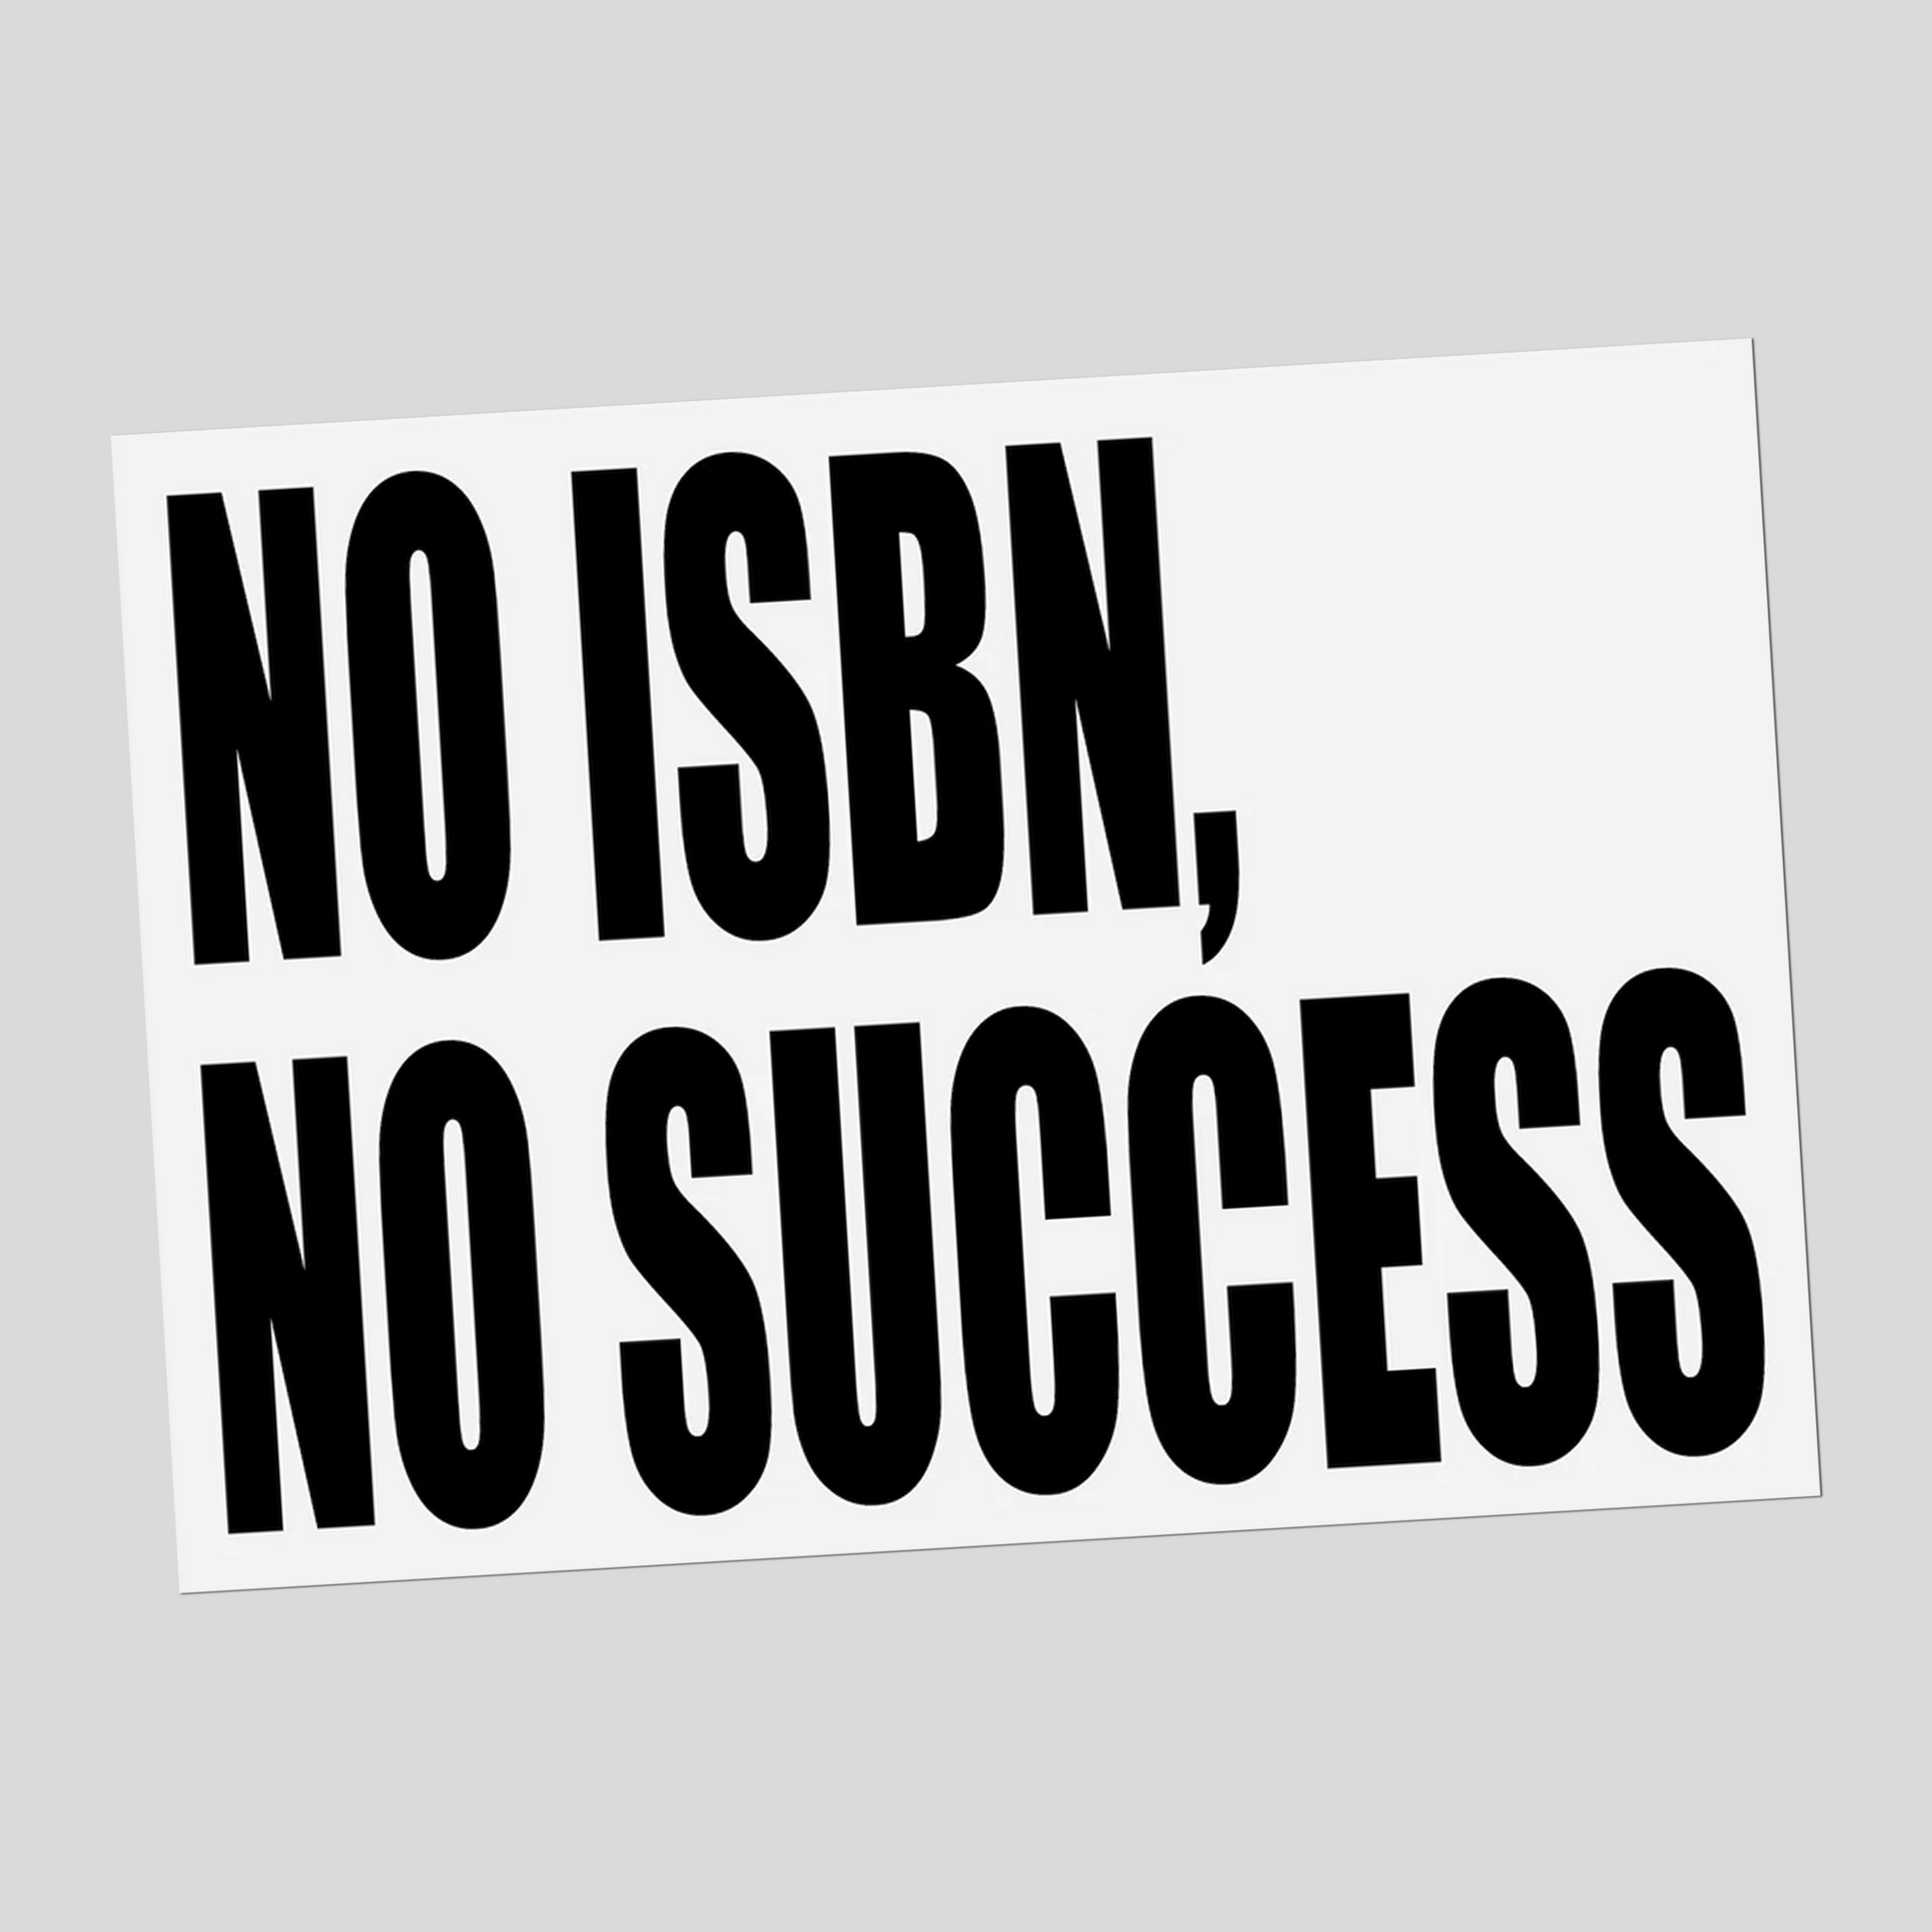 NO ISBN, NO SUCCESS